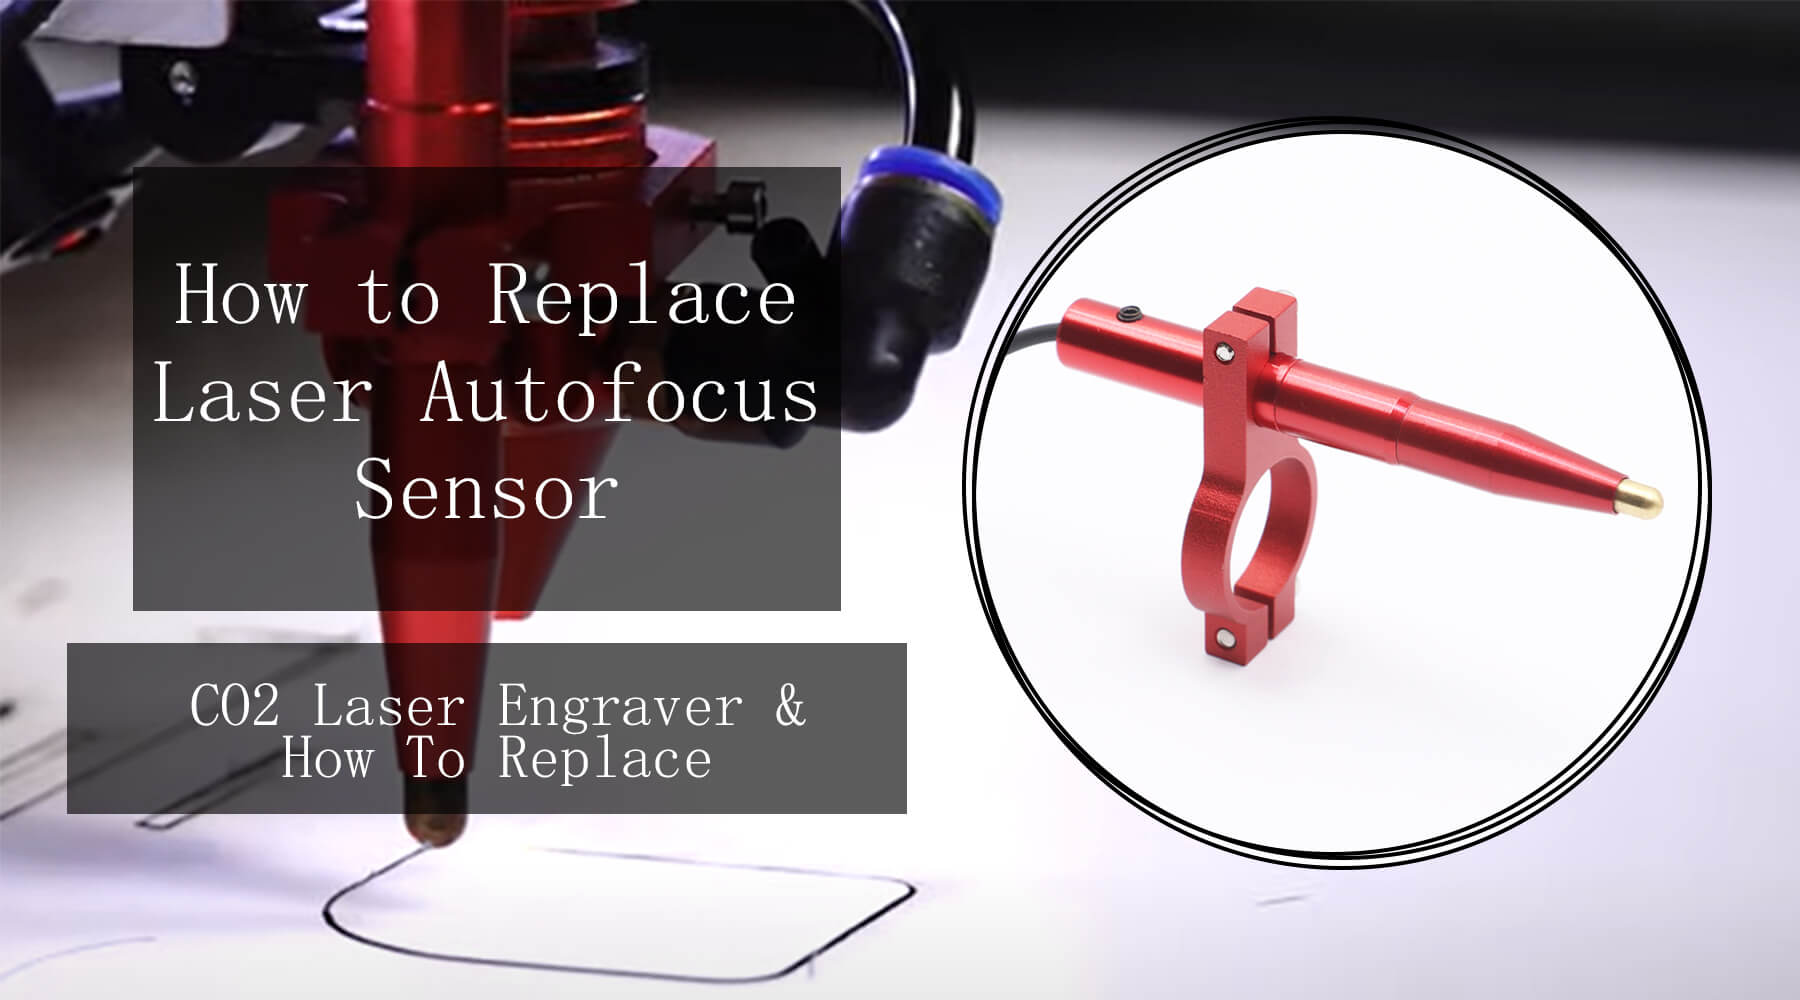 How to Replace Laser Autofocus Sensor?